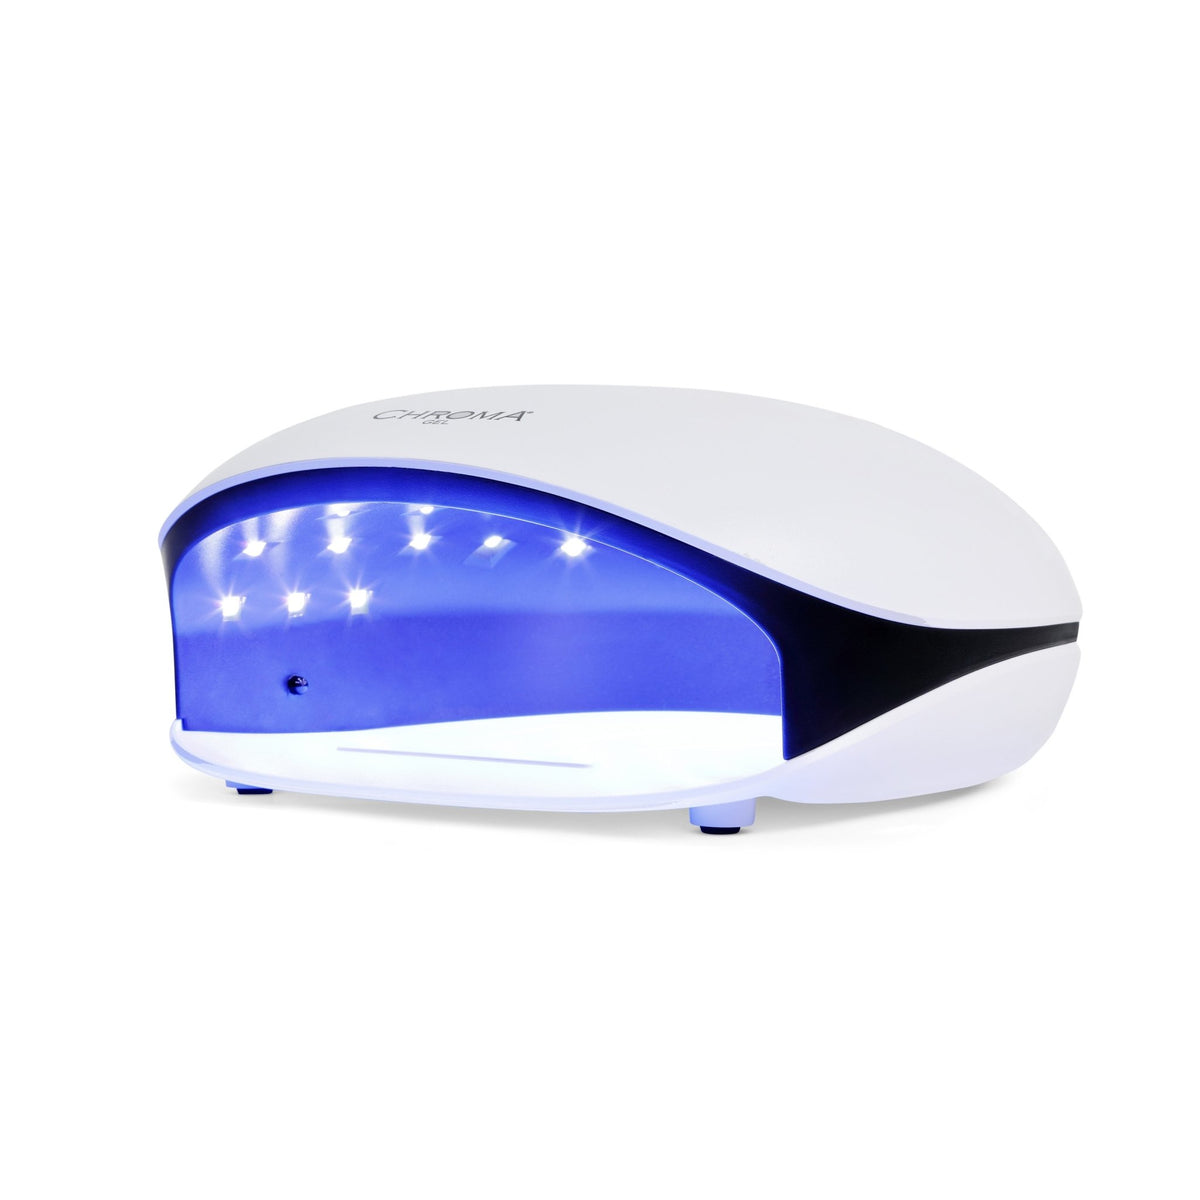 Professional 48W Smart Nail LED & UV Lamp for Gel Nail Polish - Chroma Gel